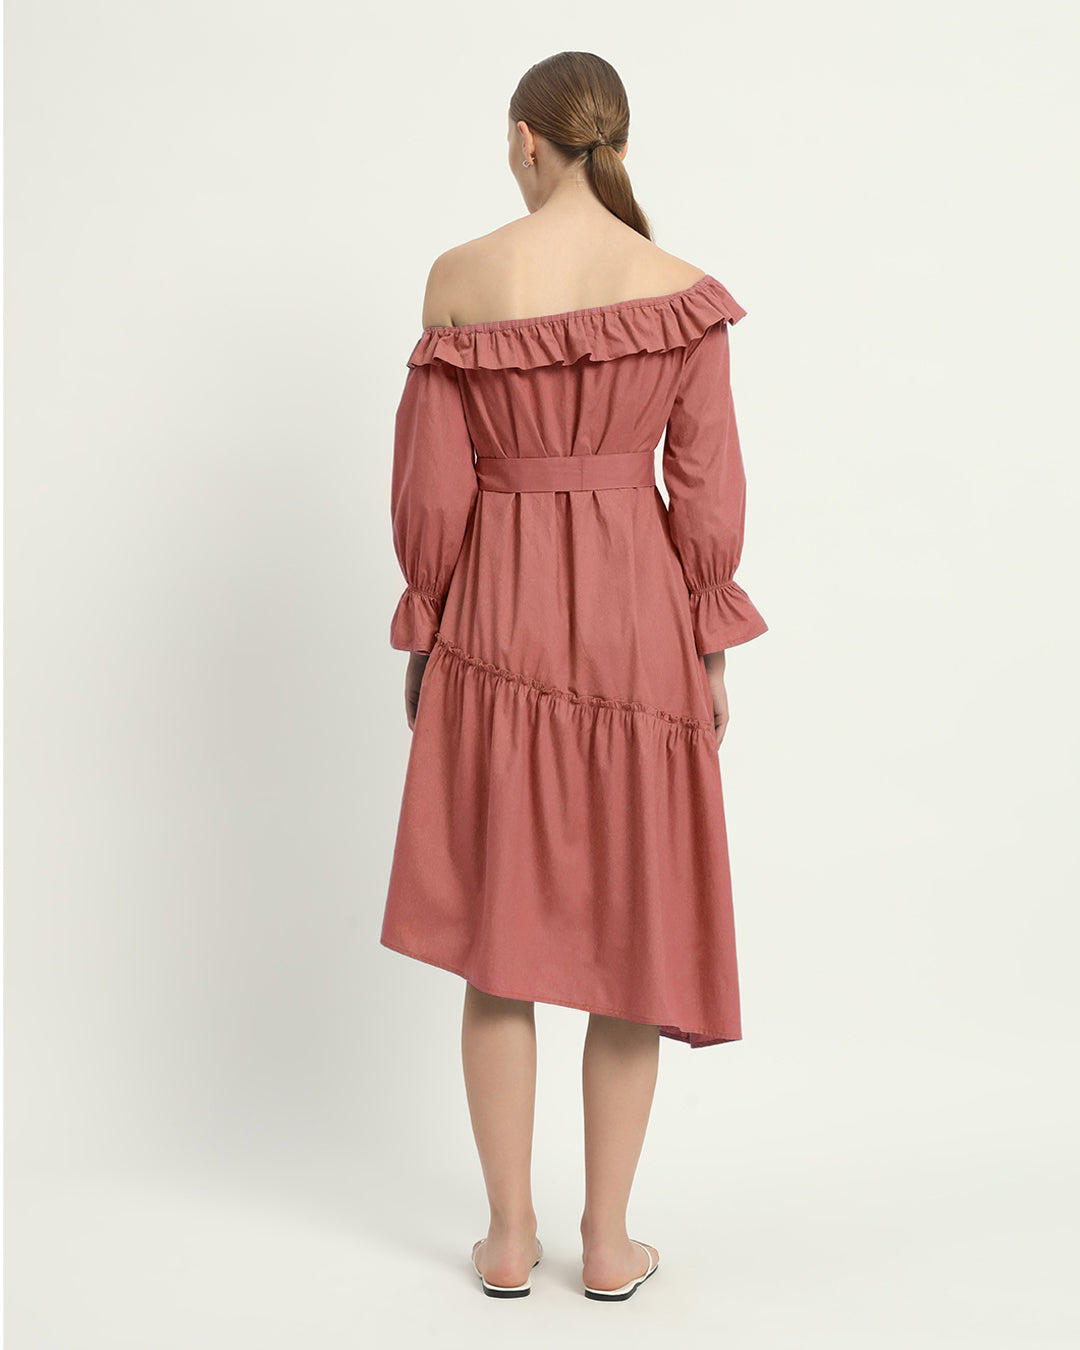 The Ivory Pink Stellata Cotton Dress